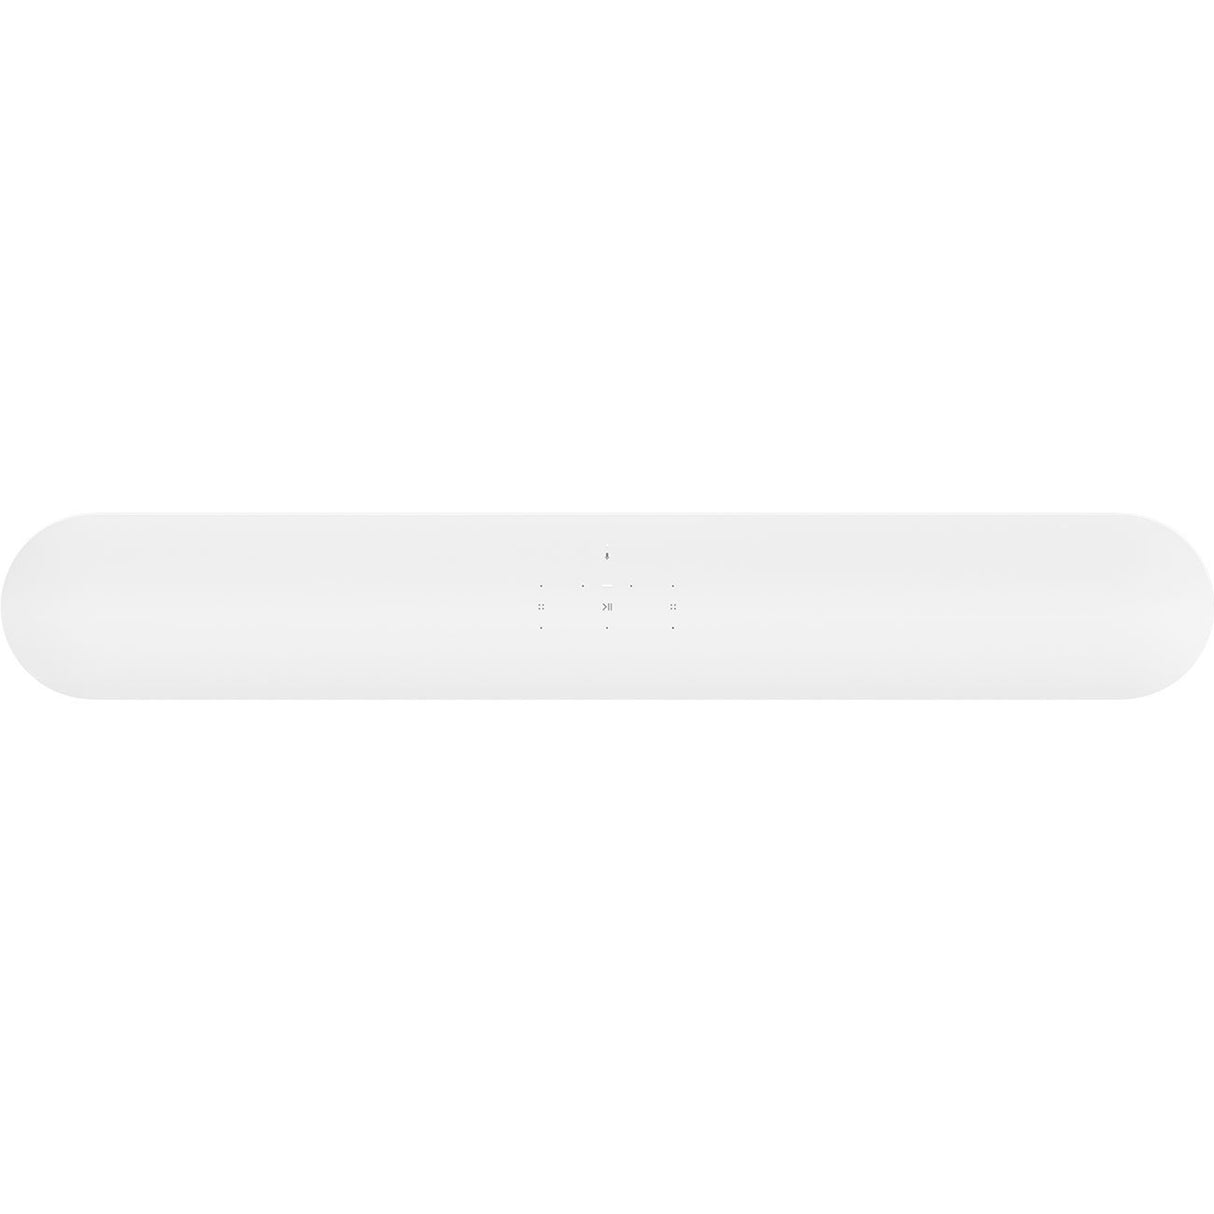 Sonos Beam Gen 2 - Compact Smart Wireless Dolby Atmos Soundbar (White)